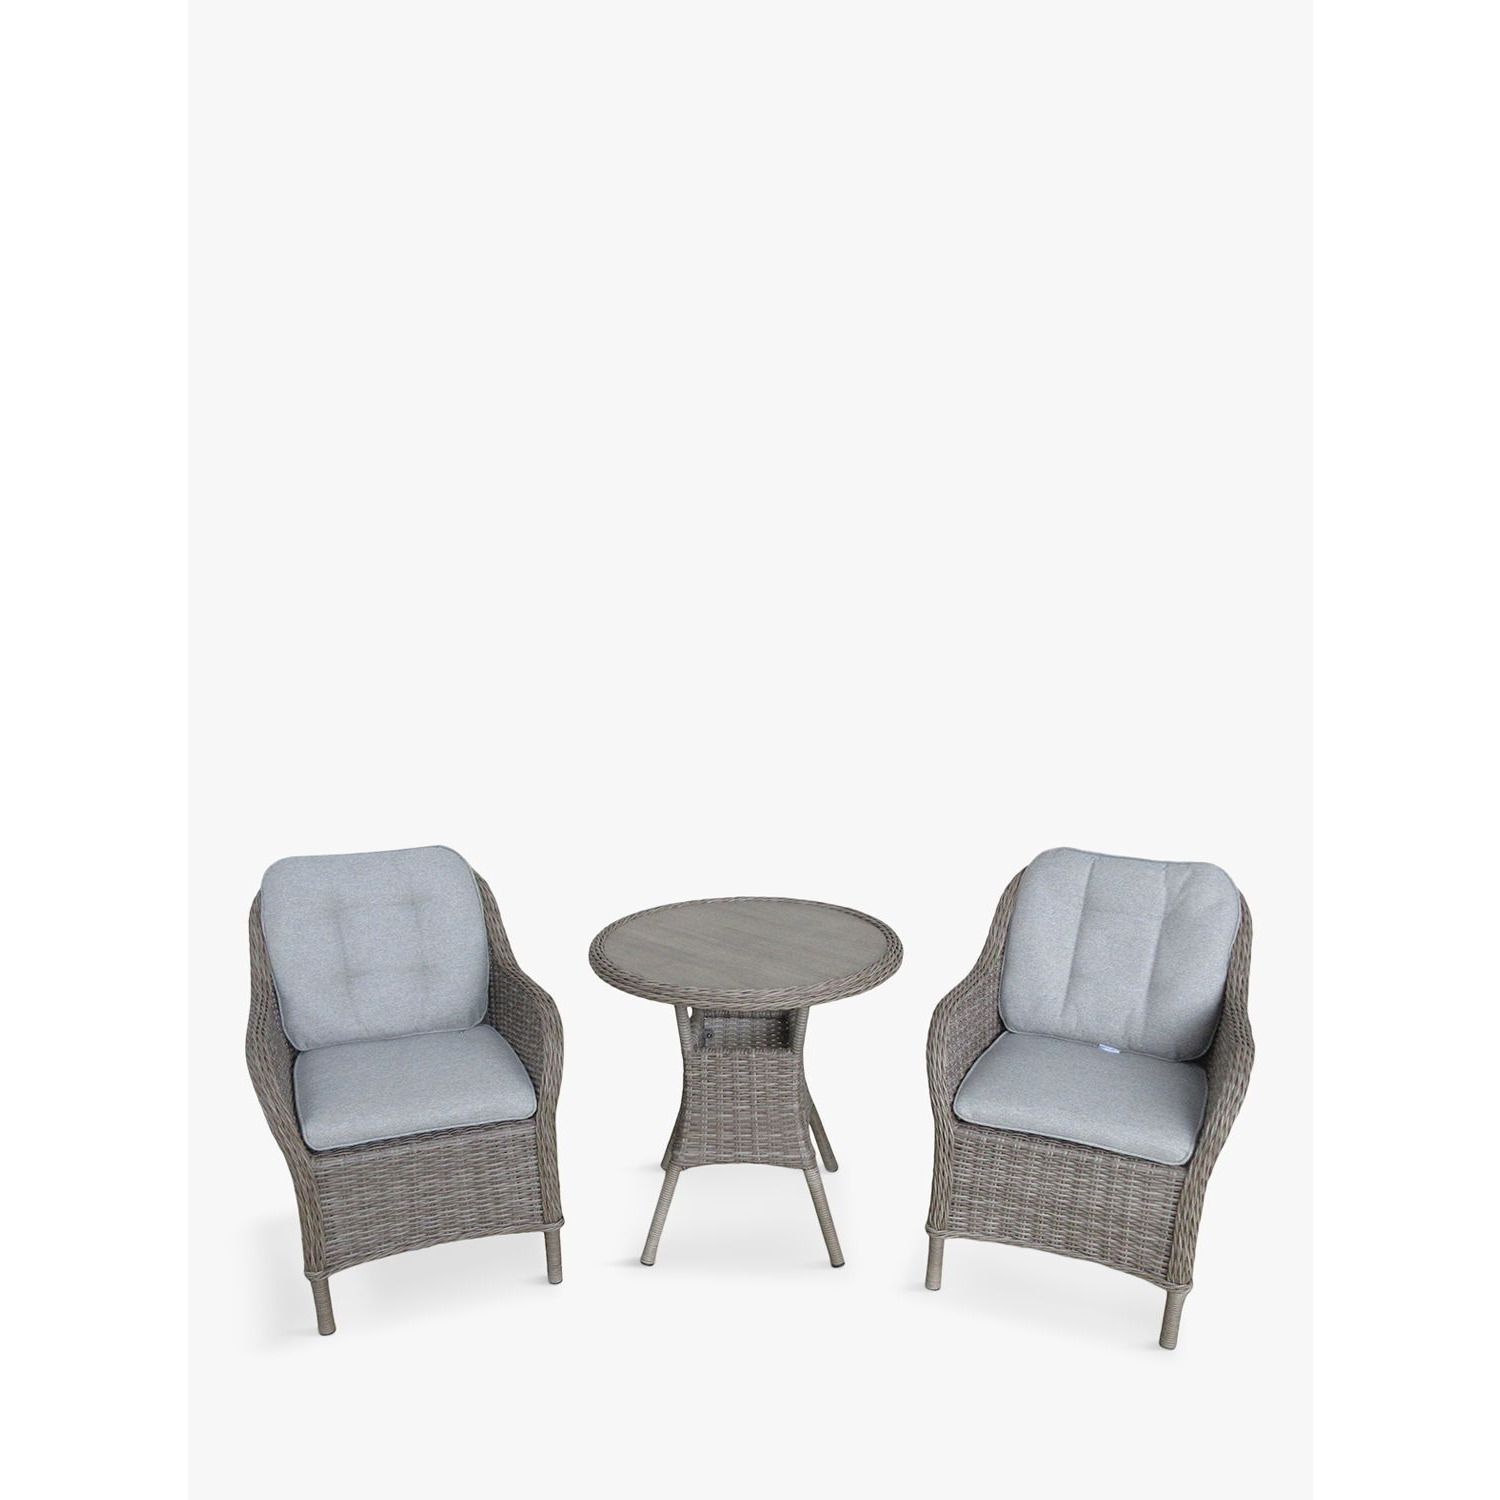 LG Outdoor St Tropez 2-Seater Round Garden Bistro Table & Chairs Set - image 1